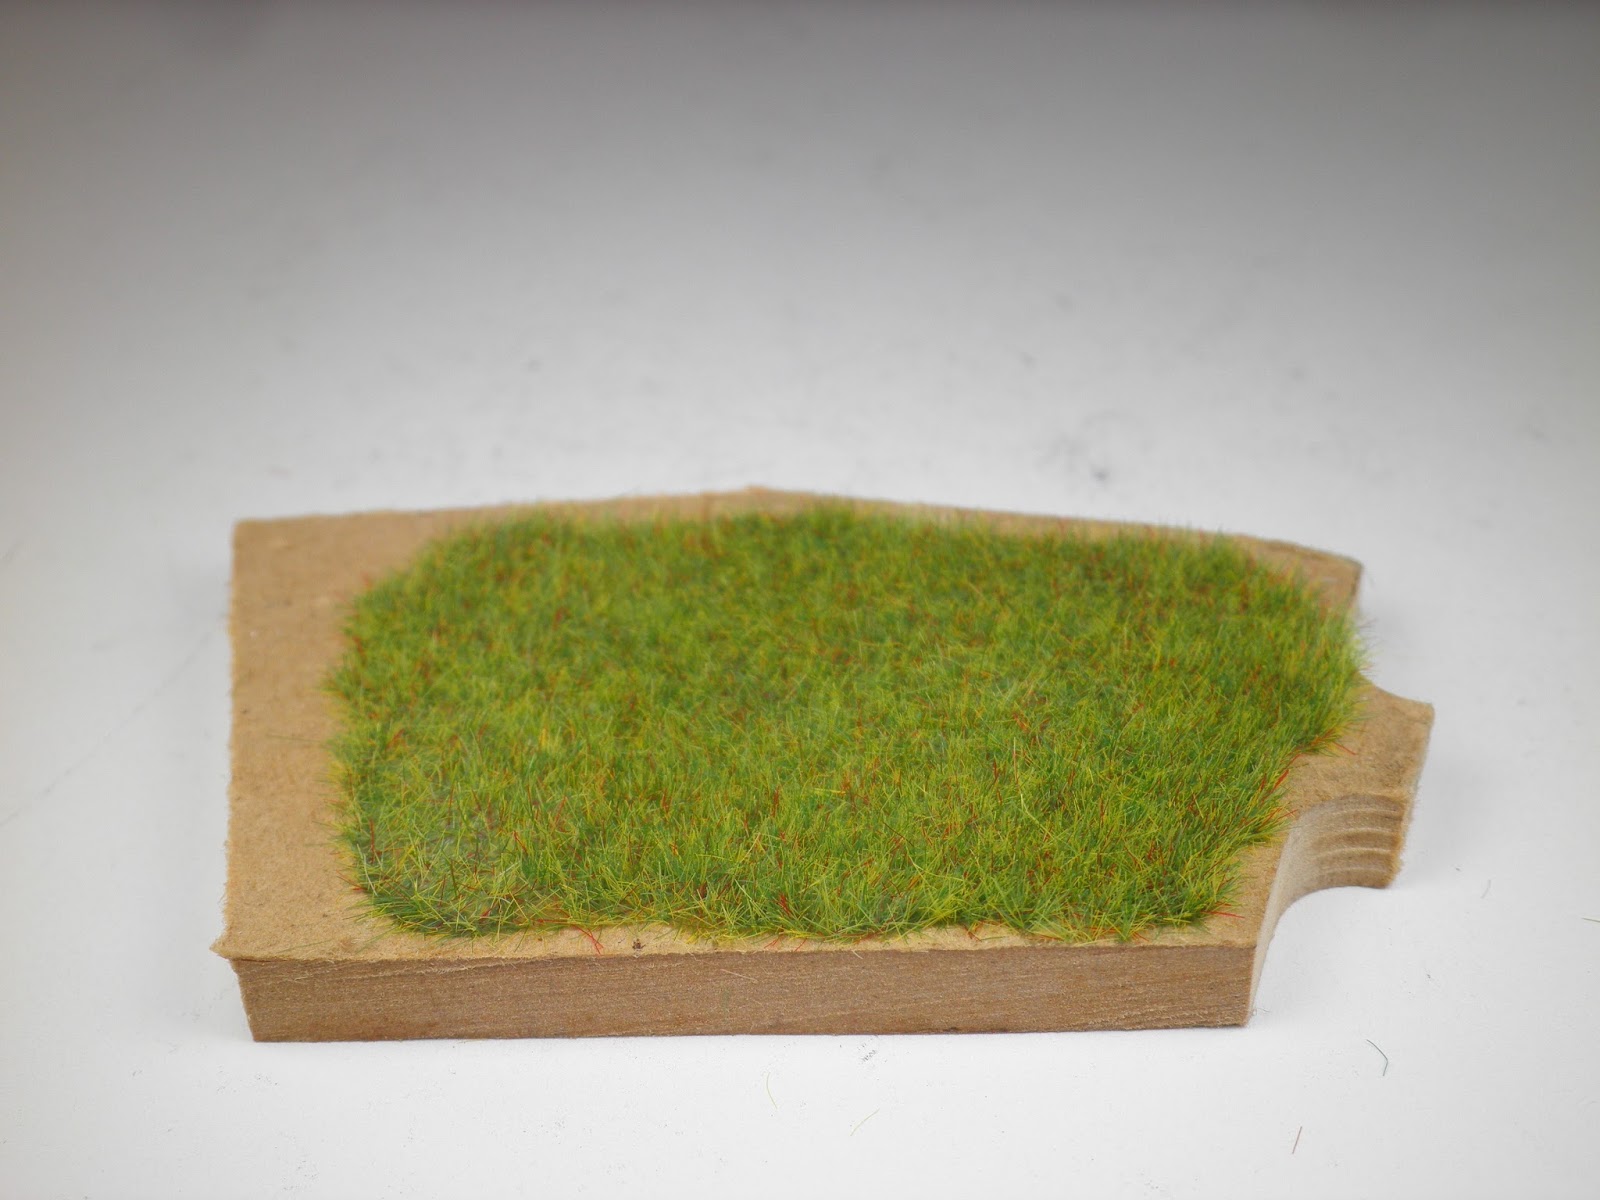 Benno's Figures Forum • DIY static grass applicator